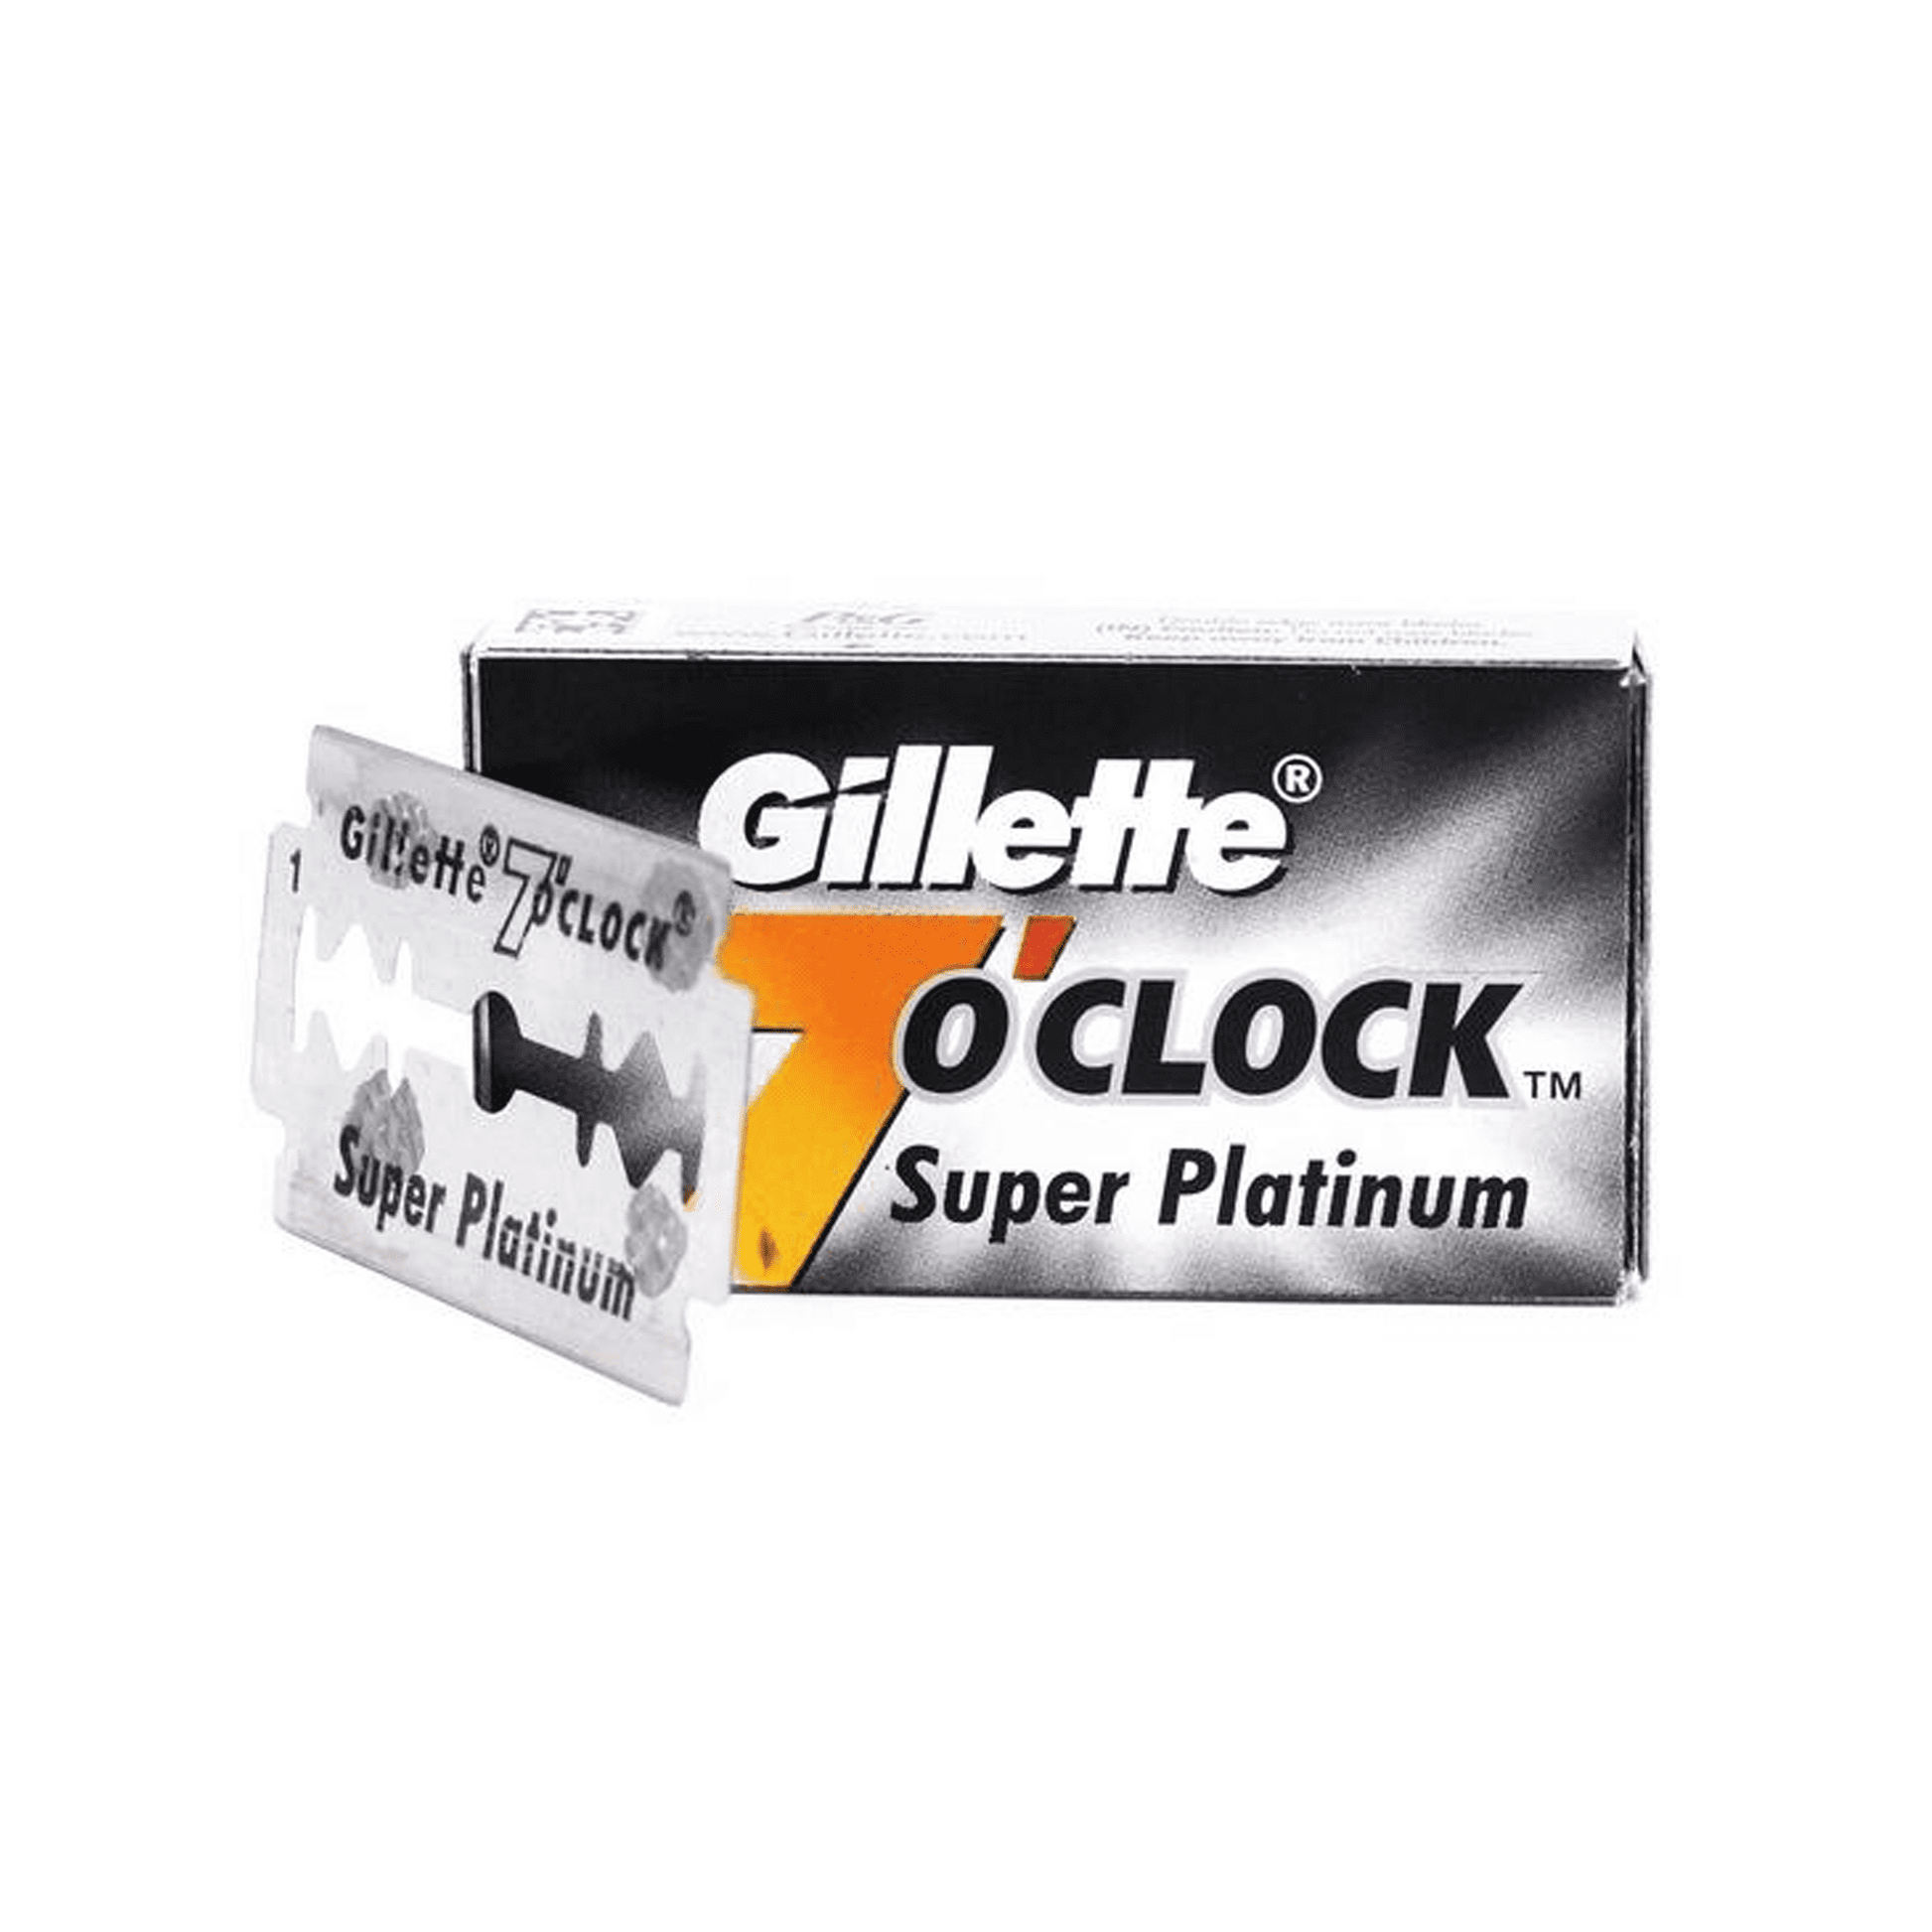 Gillete 7'O Clock Super Platinum Blades.